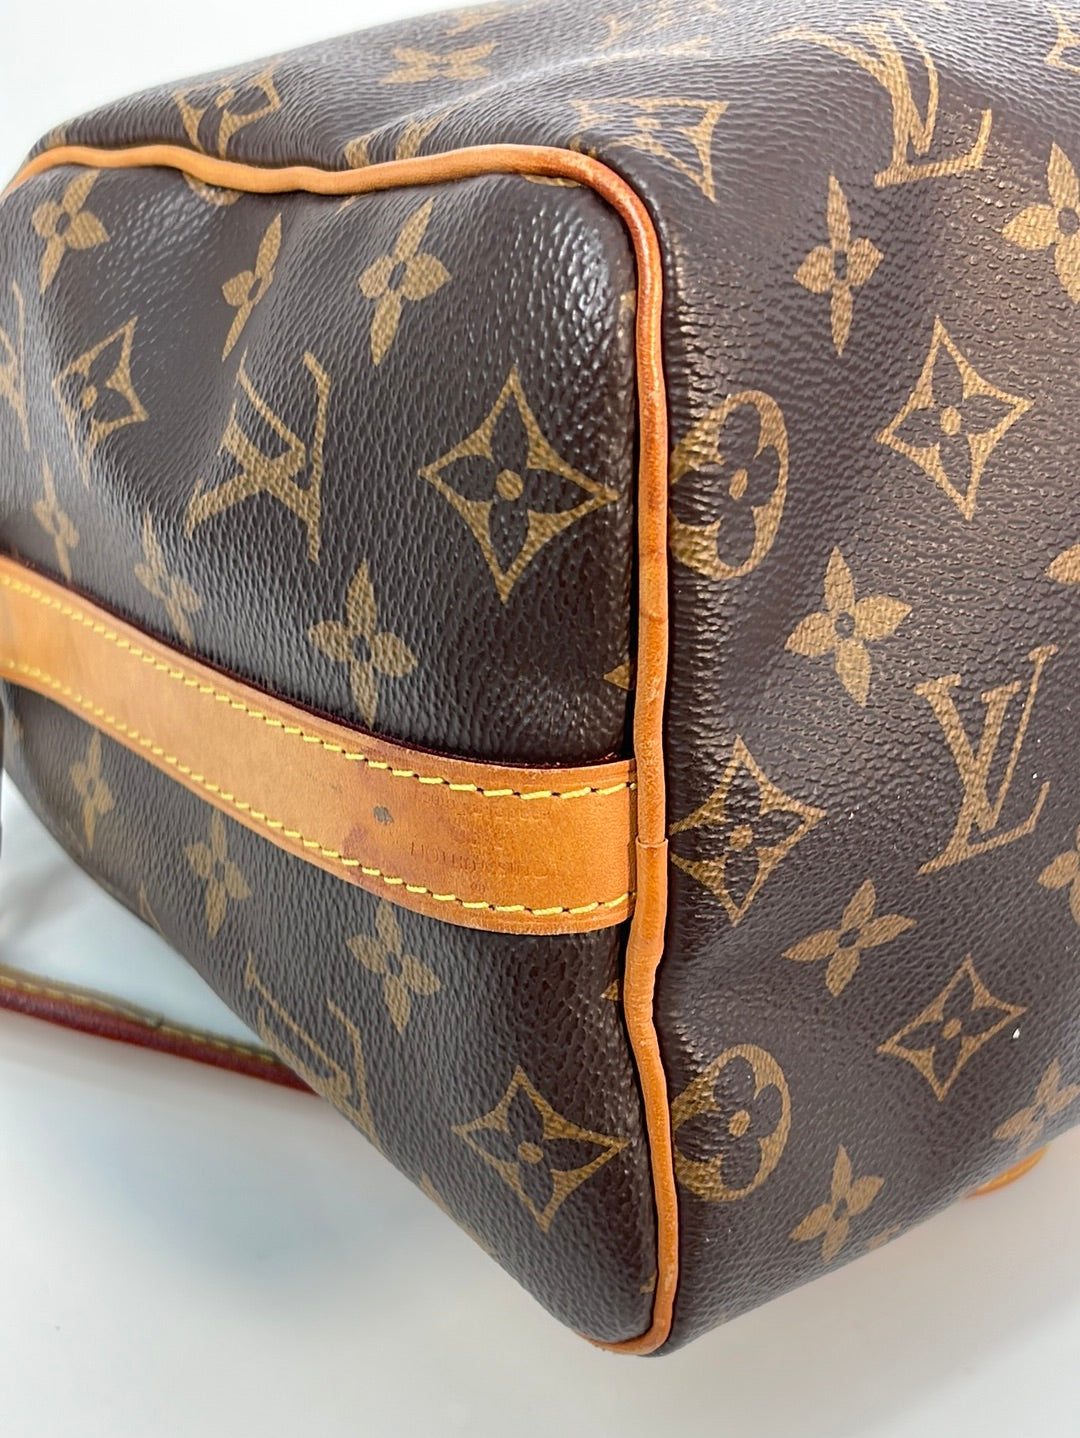 Louis Vuitton Speedy 25 Monogram Canvas Shoulder Bag